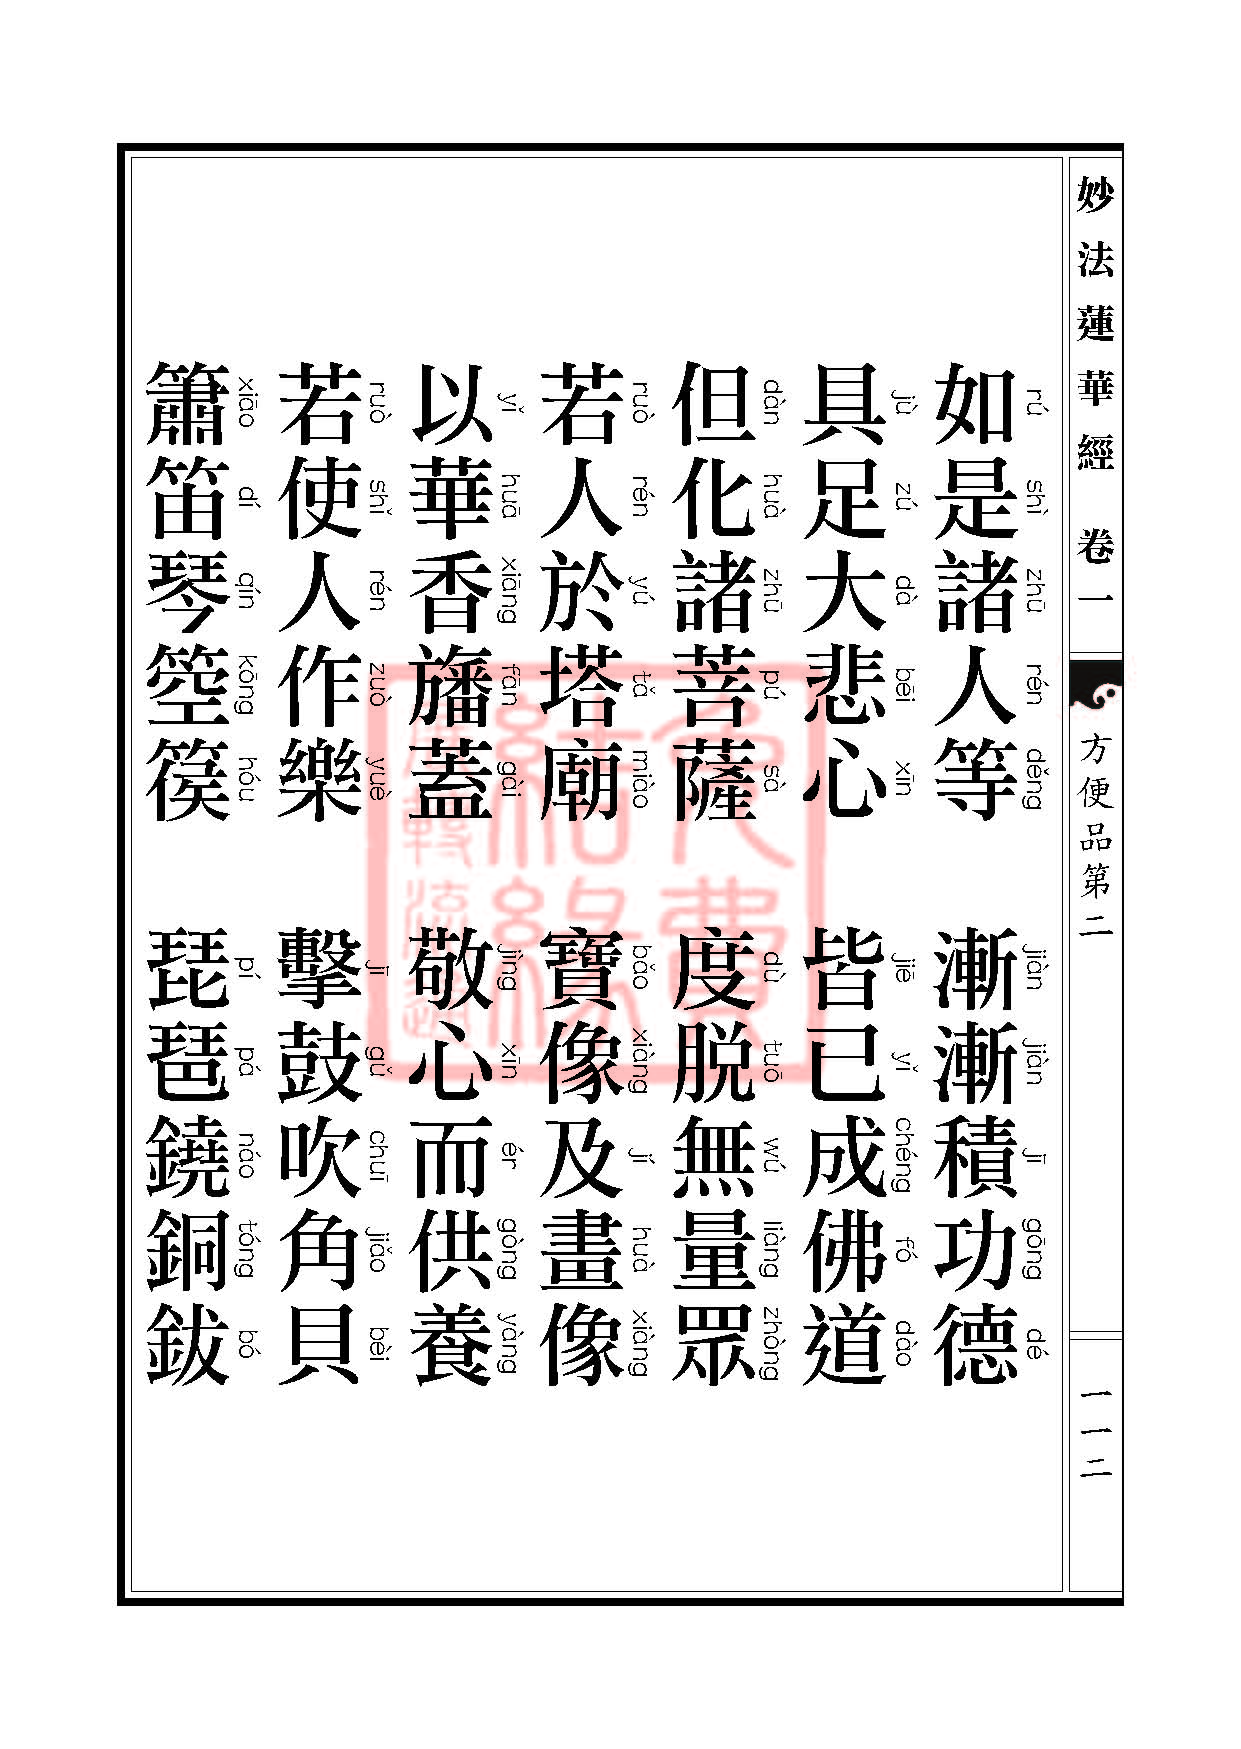 Book_FHJ_HK-A6-PY_Web_页面_112.jpg